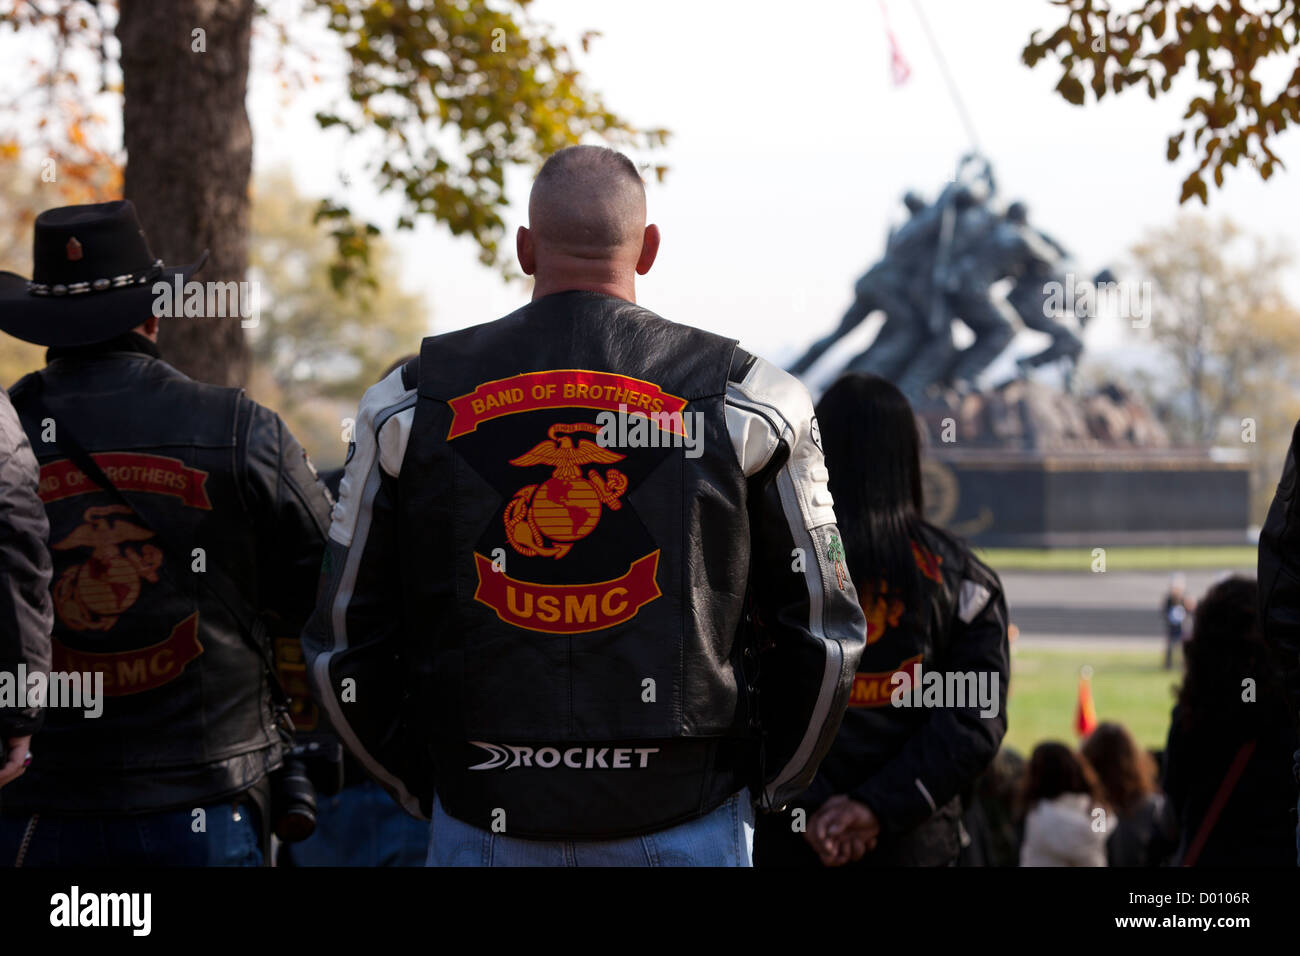 Band of Brothers USMC motorcycle riding club insignia on jacket Stock Photo